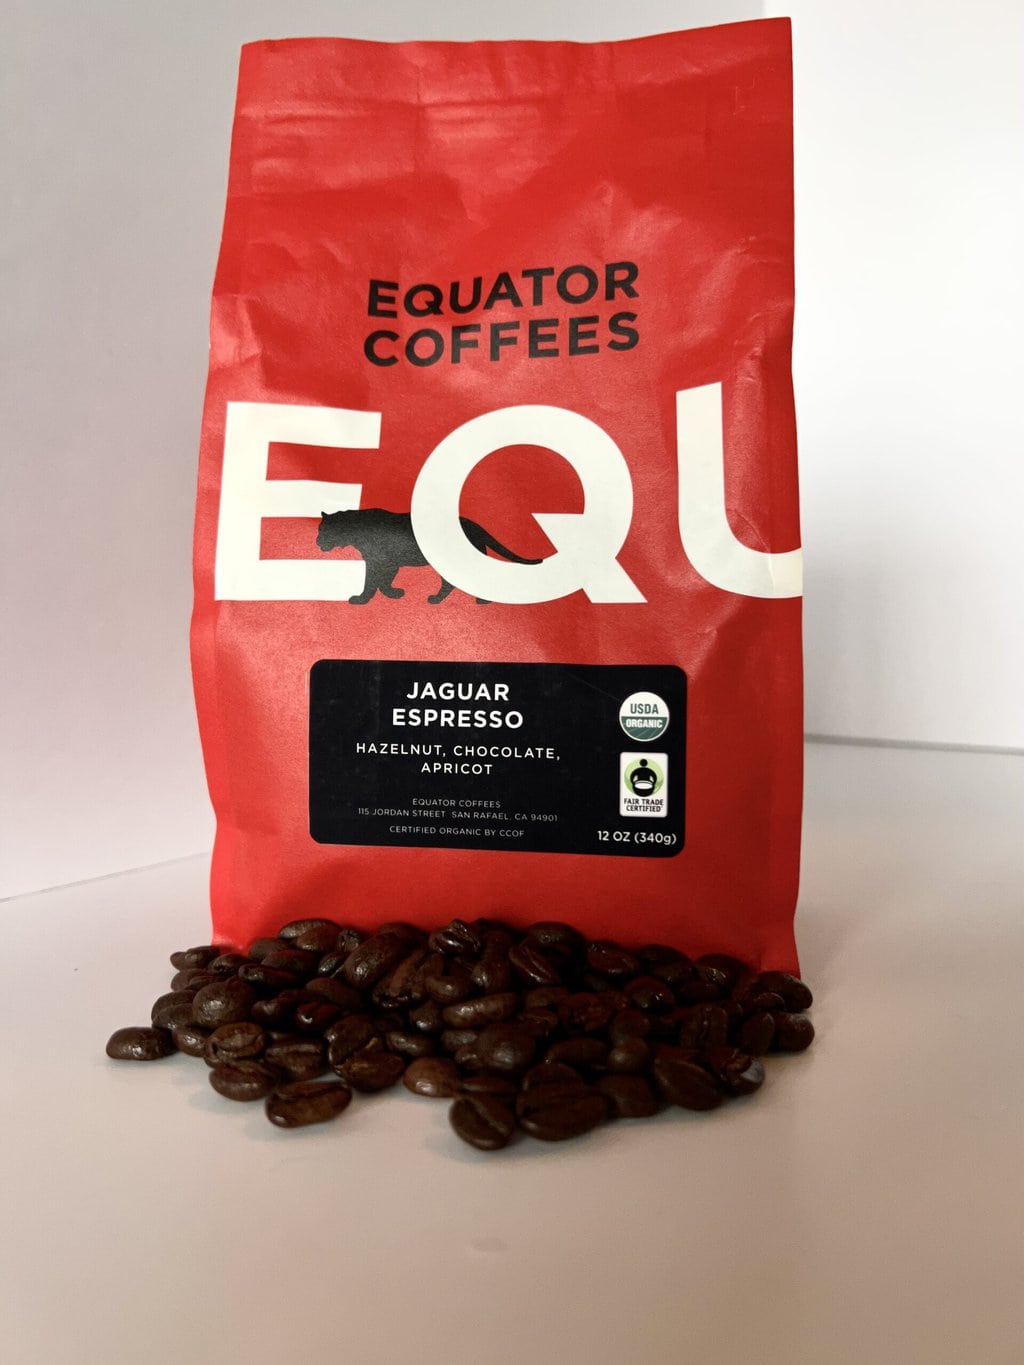 Jaguar Espresso Fair Trade Organic near the coffee beans